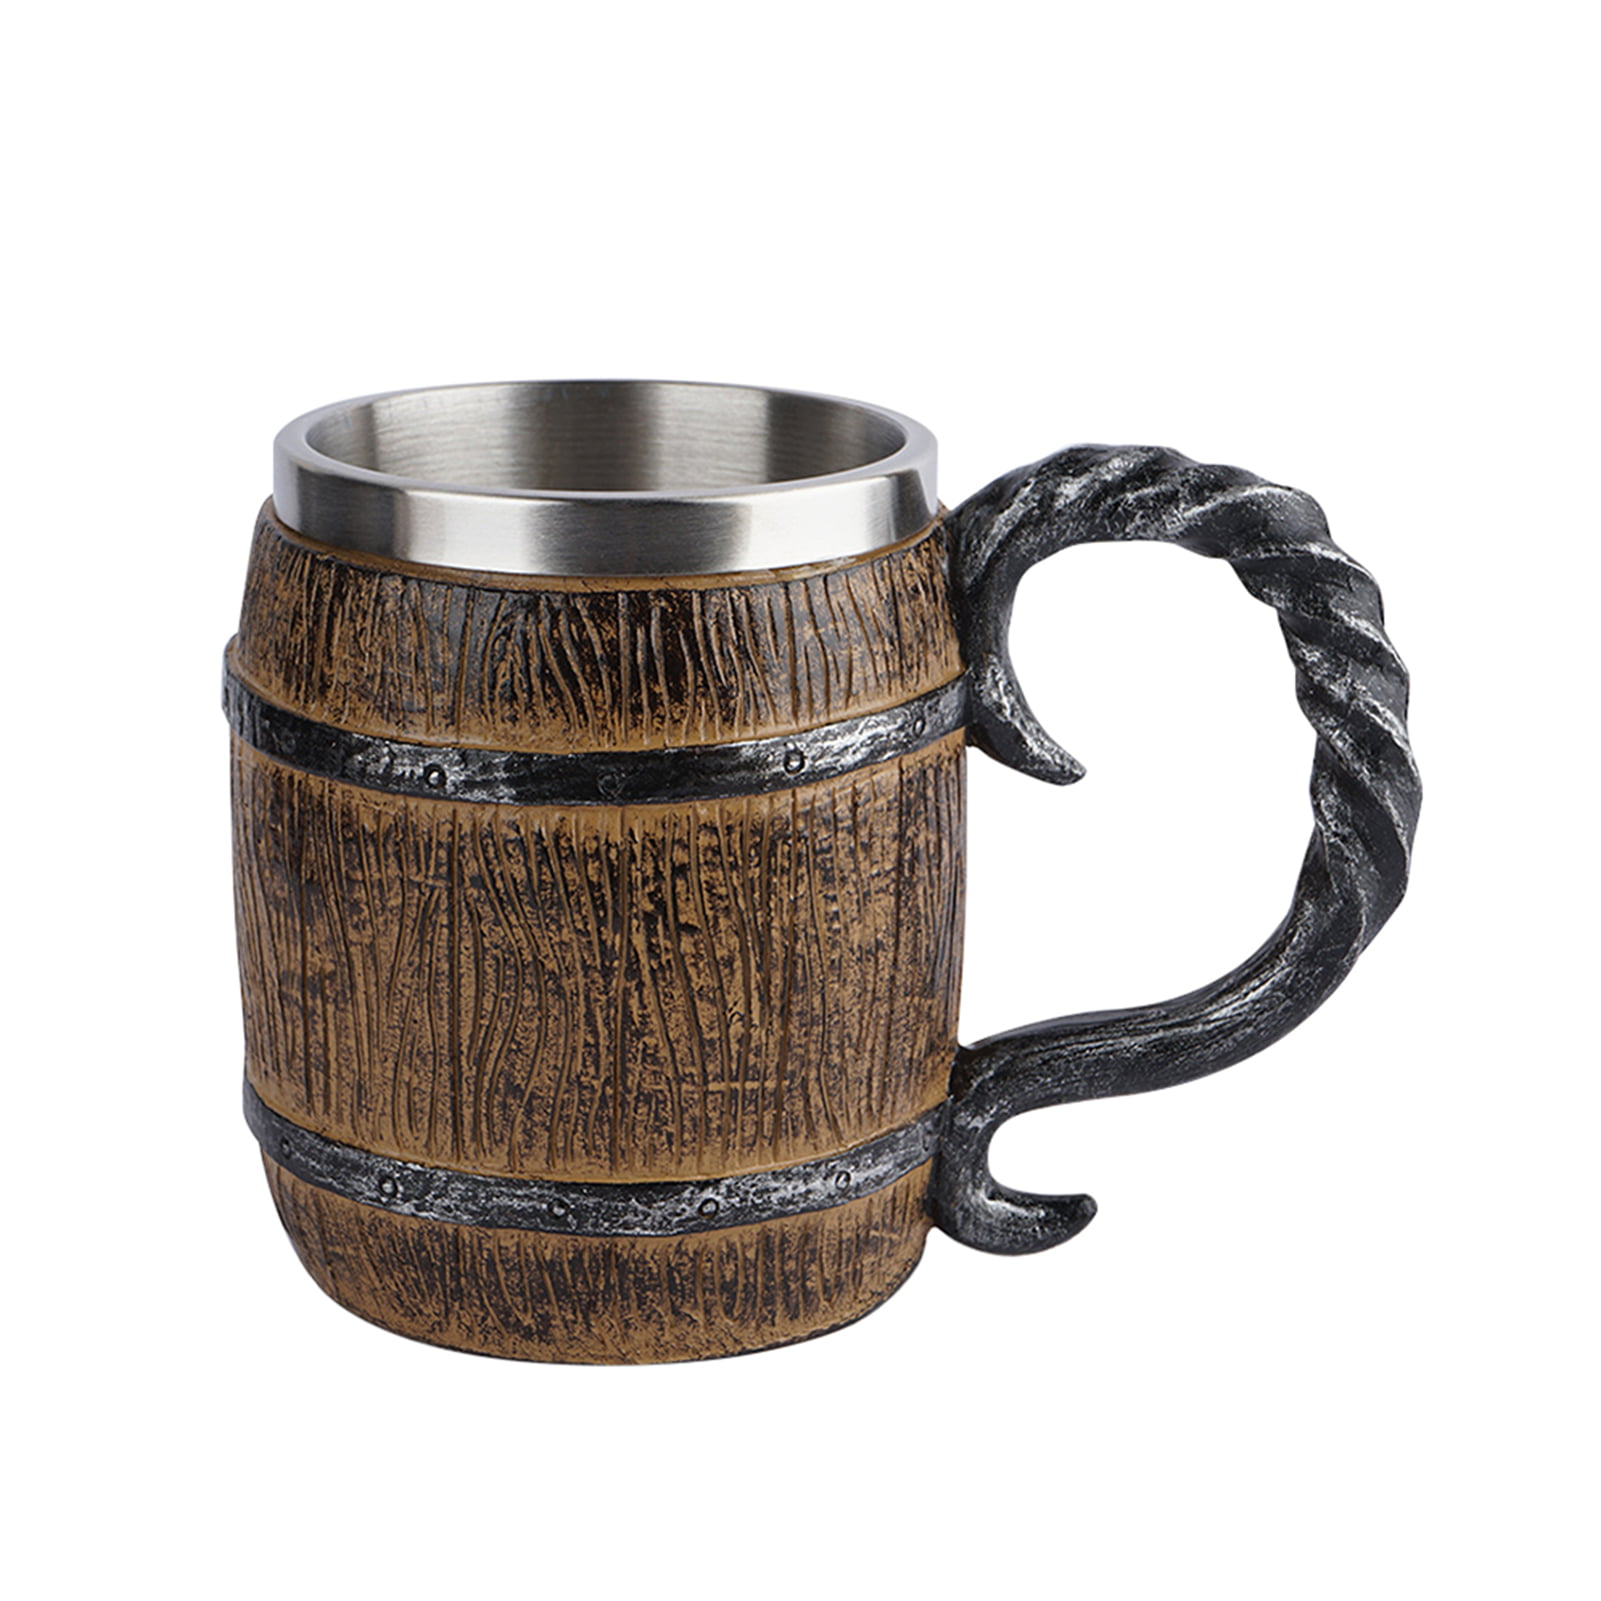 Set of 4 Mugs Set of 4 Coffee Mugs 0.6 Litres Or 20oz Wooden Mugs Set of 4 Beer Mugs / Gifts Set of 4 Wooden Beer Mugs / Set of 4 Mugs By WoodenGifts Set of 4 Stainless Steel Cups